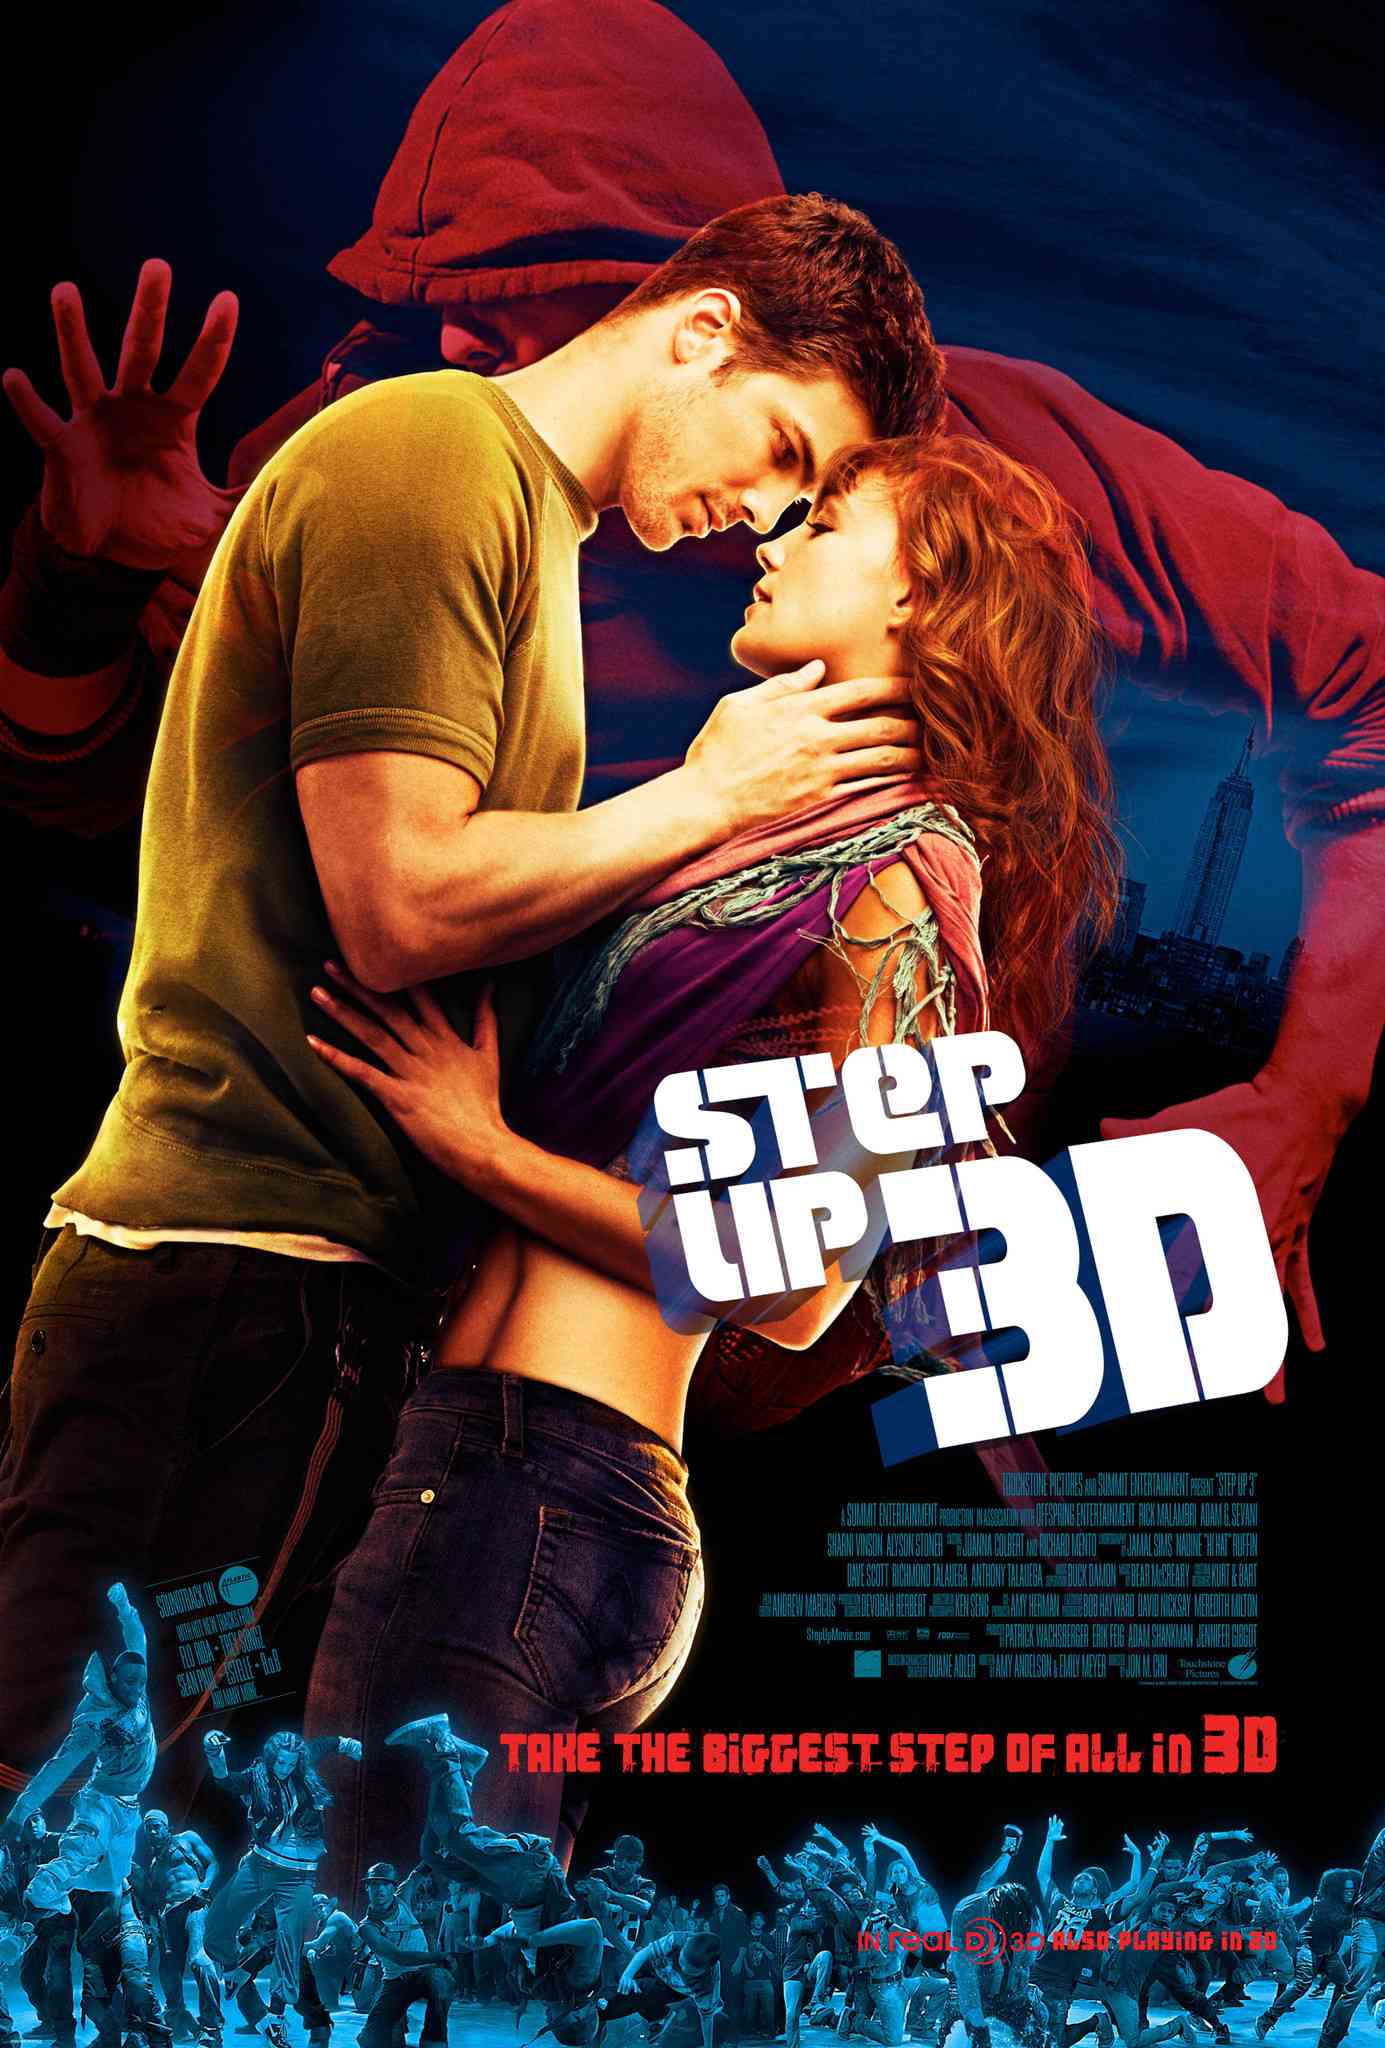 FULL MOVIE: Step Up 3D (2010) [Music]